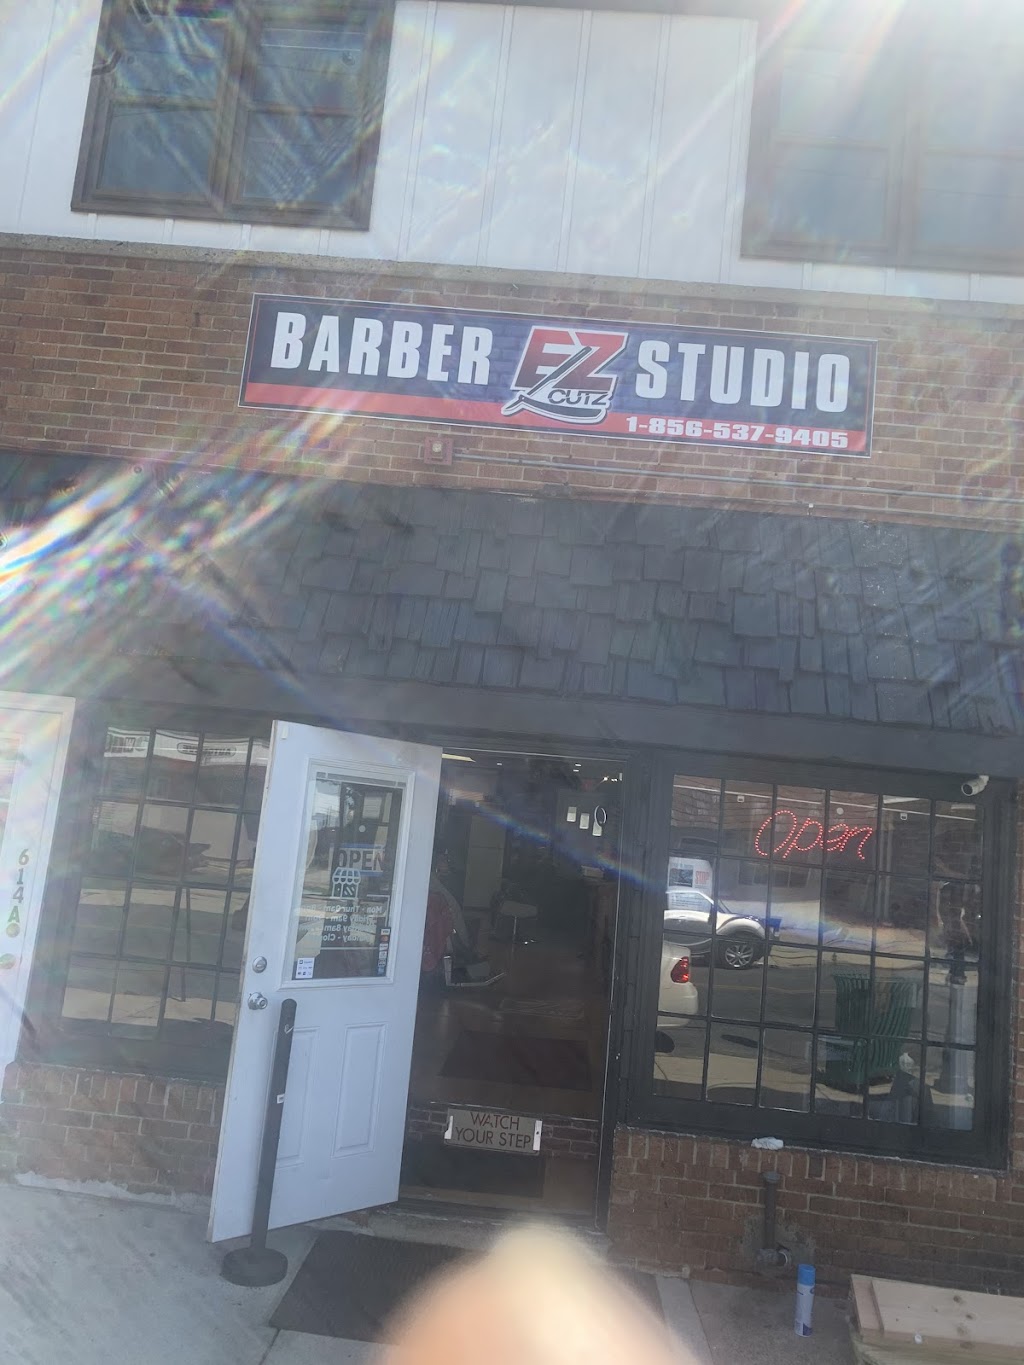 E z cutz barber studio | 614 W Maple Ave, Merchantville, NJ 08109 | Phone: (856) 537-9405